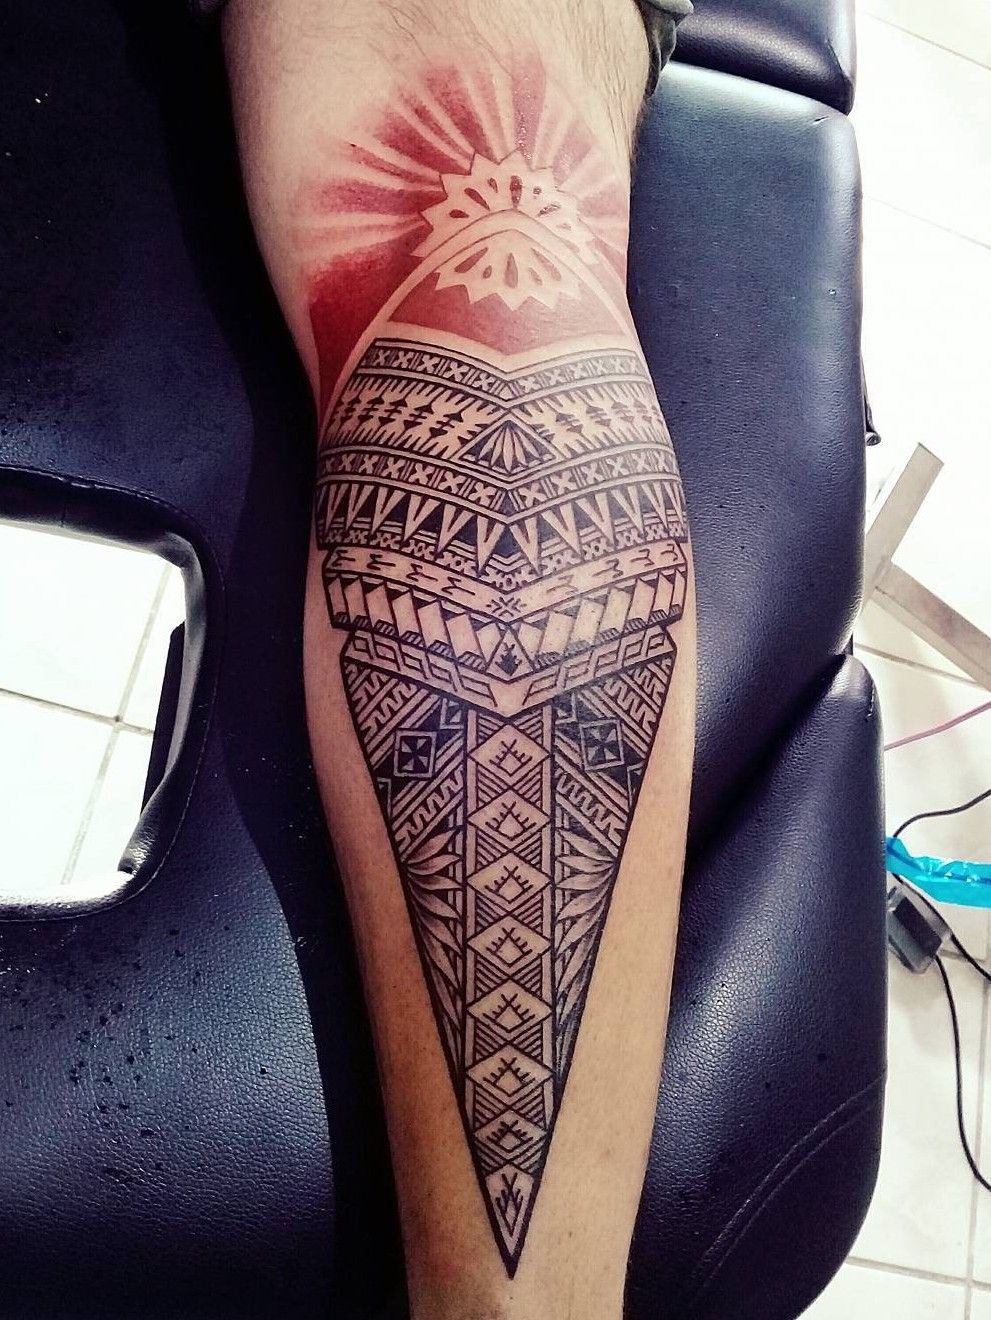 Tribal Tattoos 27 Amazing Designs We Found on Instagram